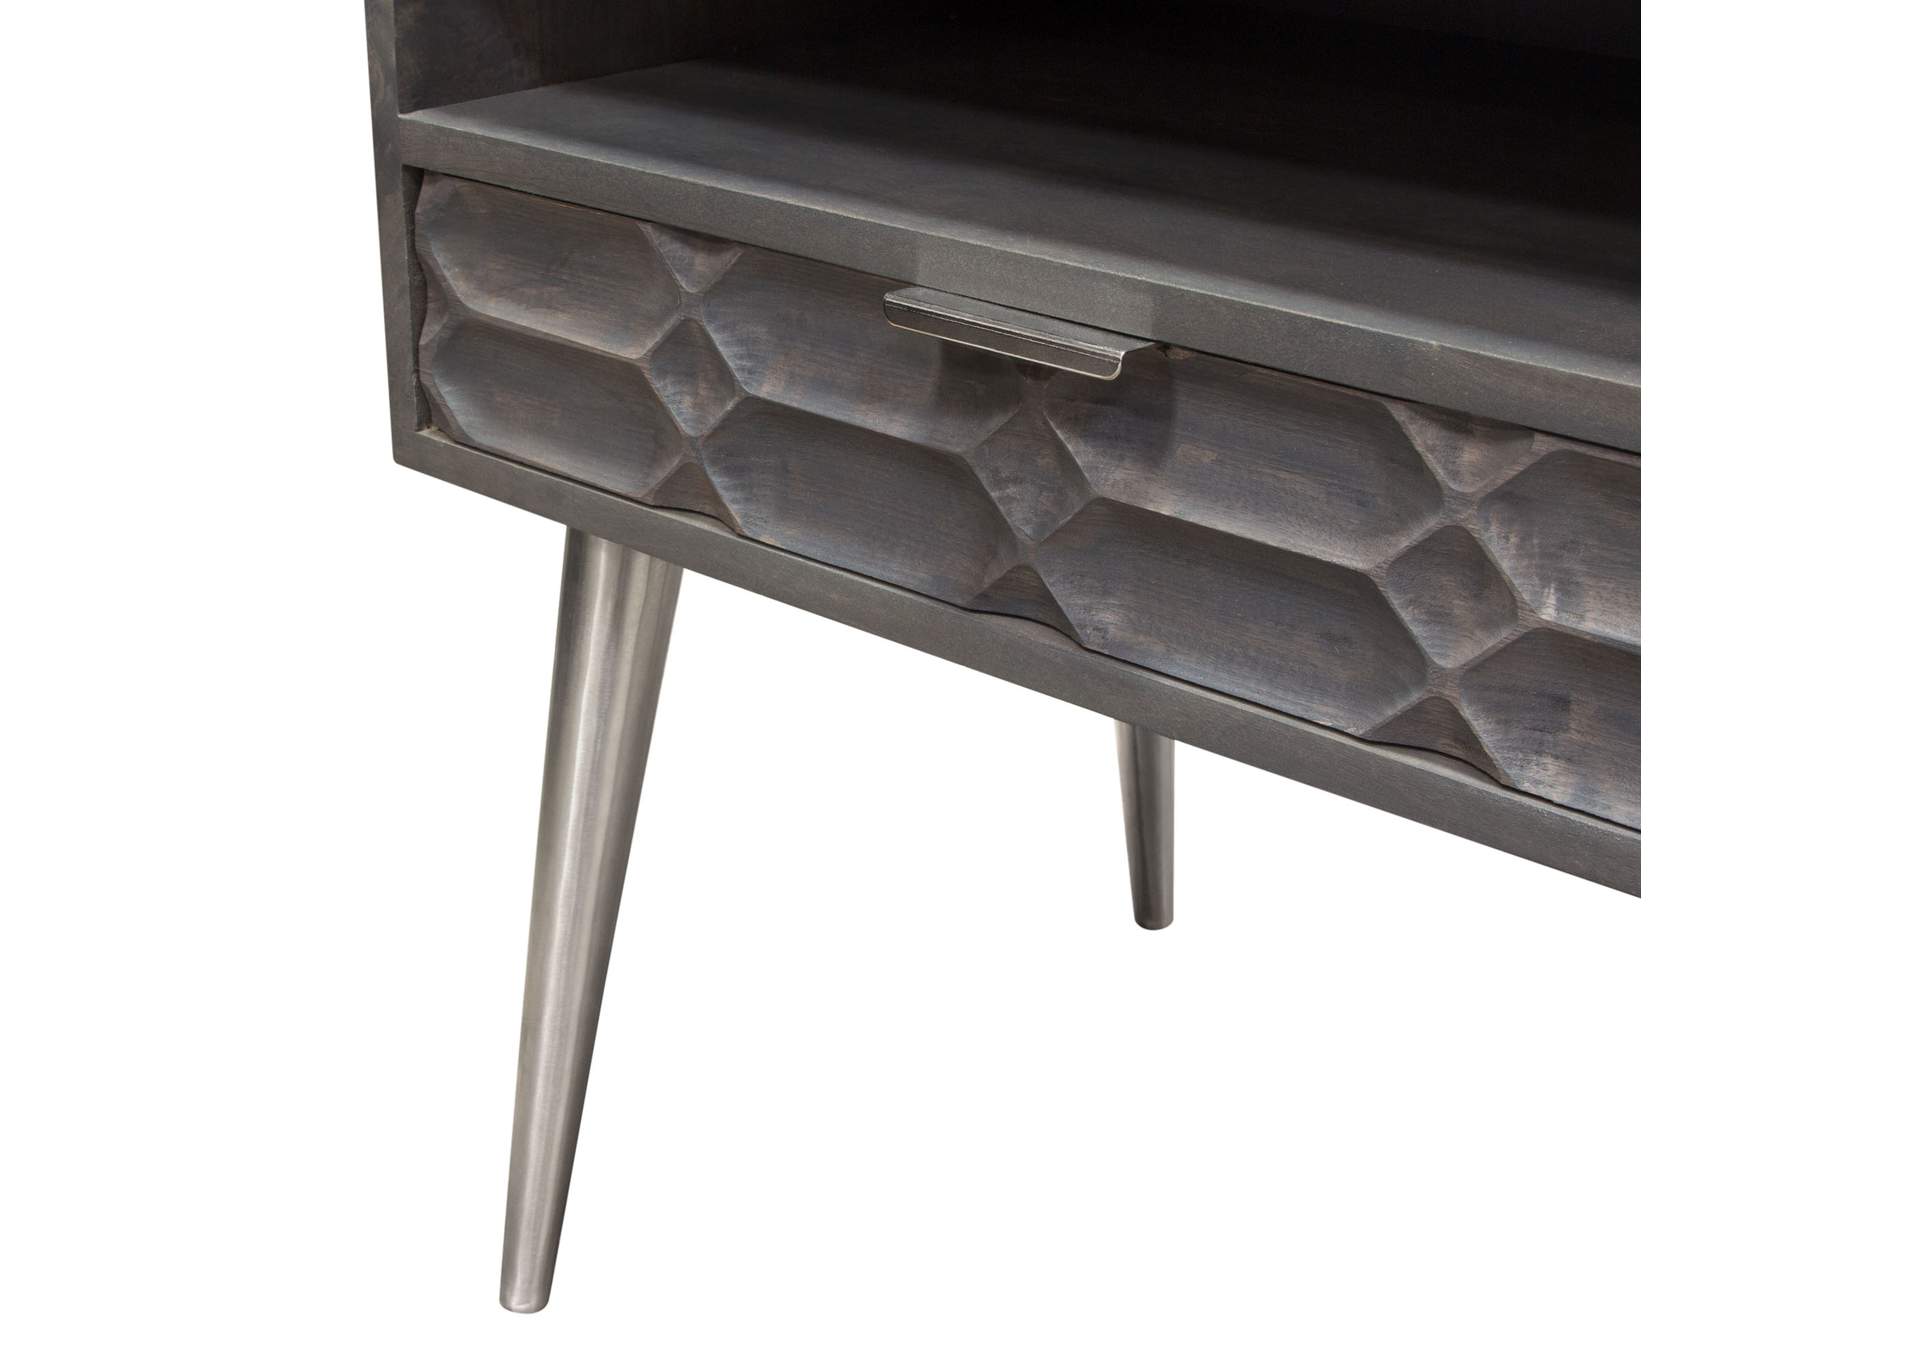 Petra Solid Mango Wood 1-Drawer Accent Table in Smoke Grey Finish w/ Nickel Legs by Diamond Sofa,Diamond Sofa